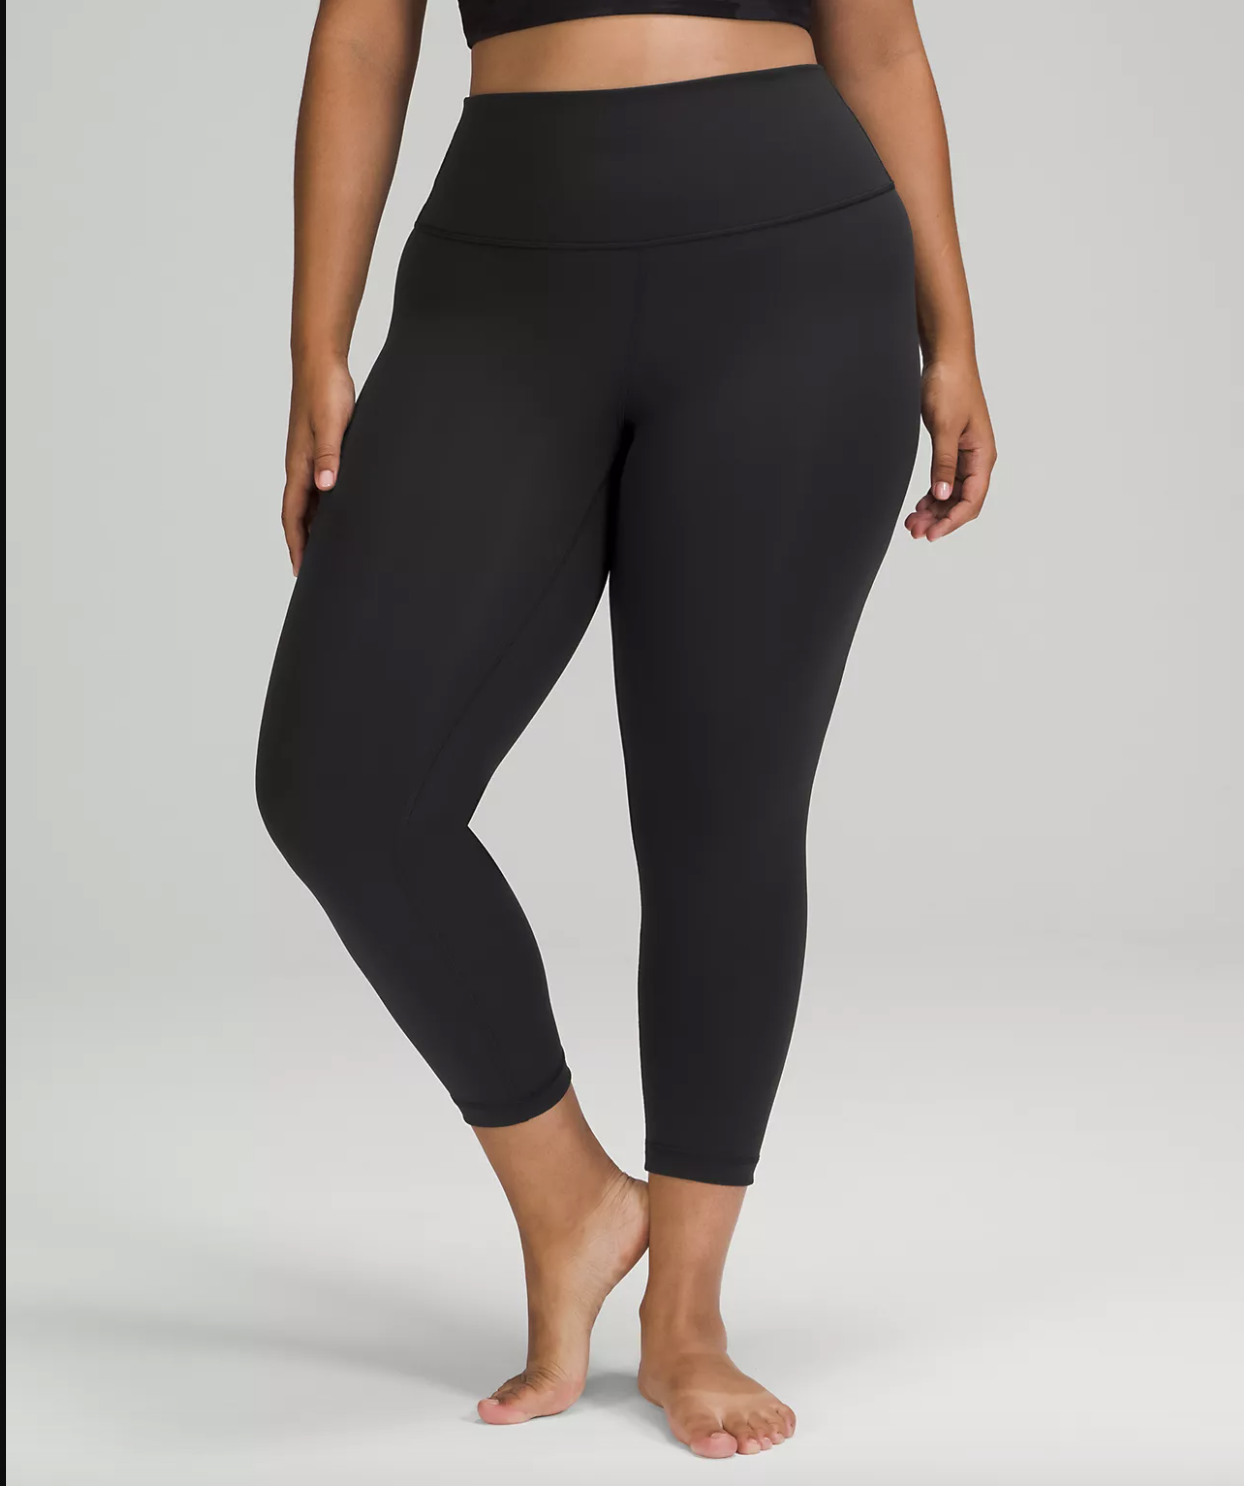 Sexy Black Yoga Pants